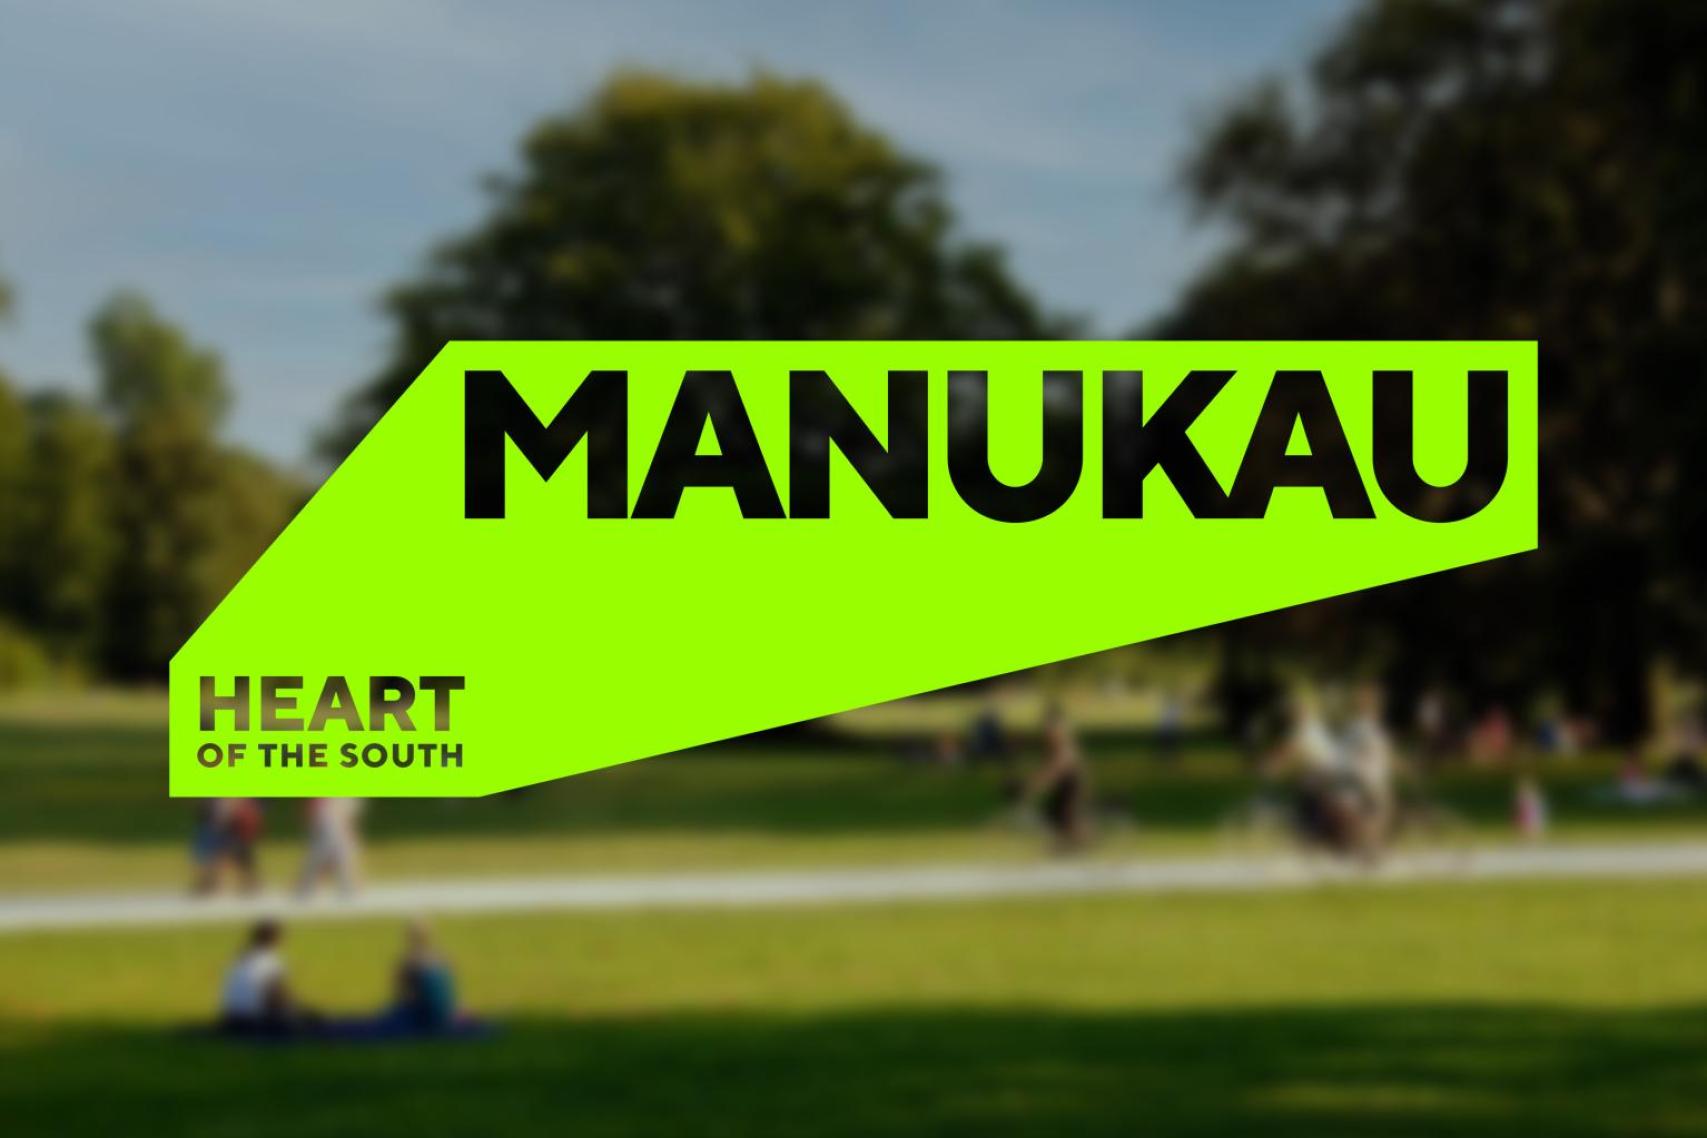 Manukau place branding and design